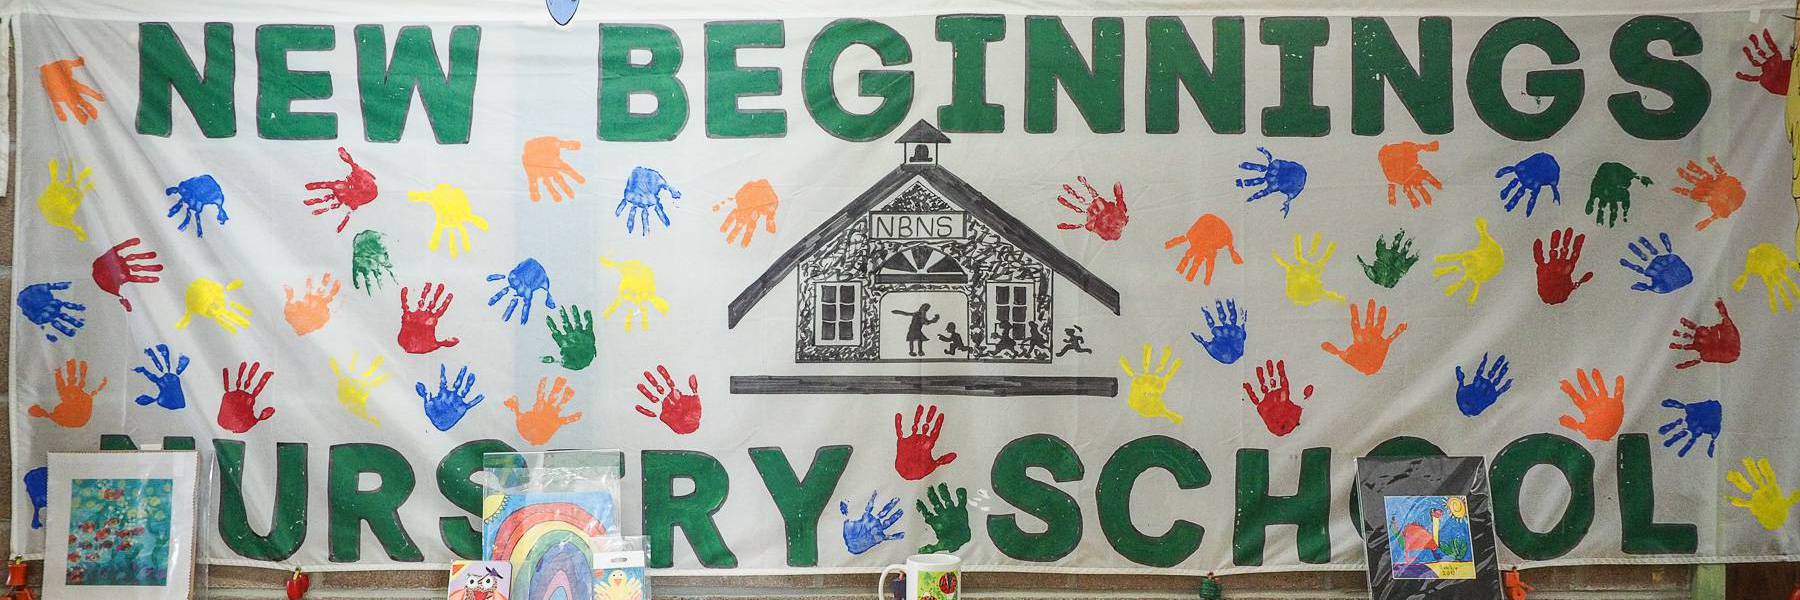 New Beginnings Nursery School banner